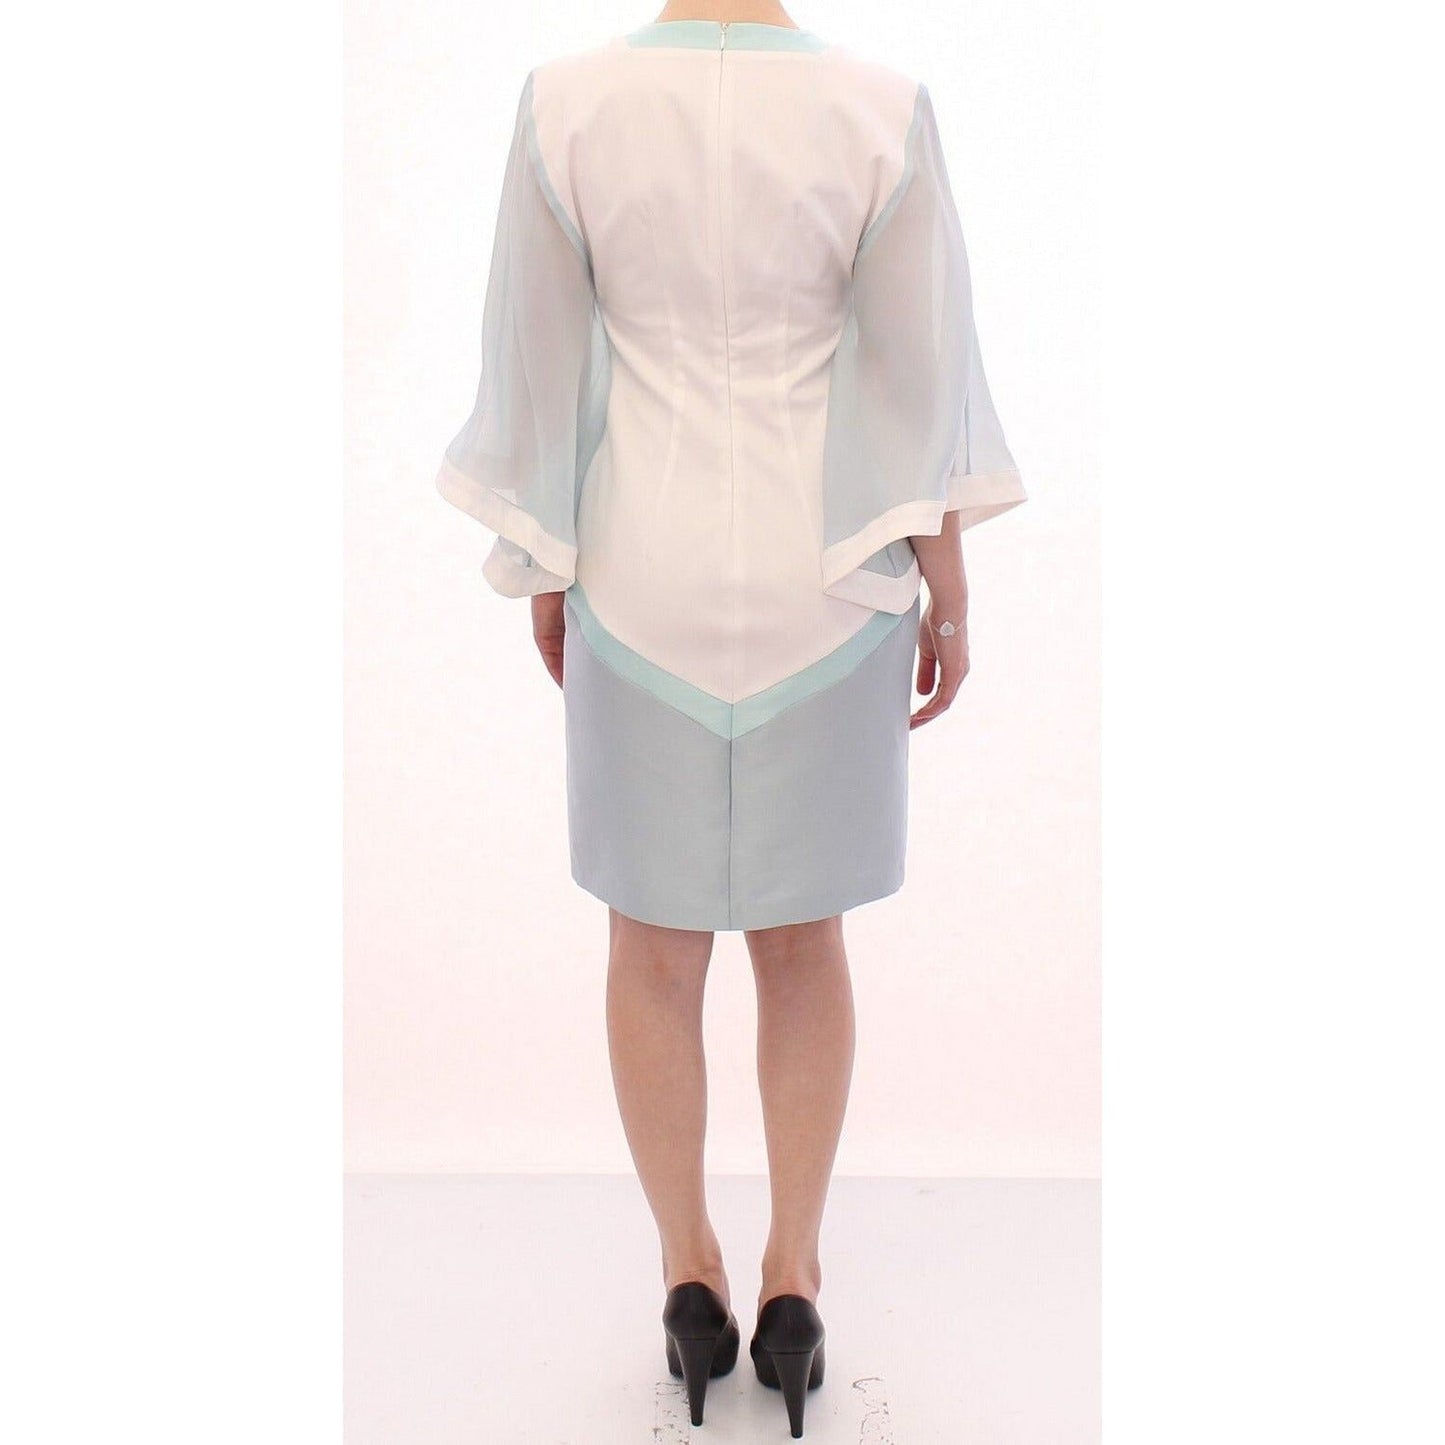 Sergei Grinko Elegant Turquoise Silk Sheath Dress white-silk-sheath-formal-turquoise-dress WOMAN DRESSES s-l1600-28-2-a93f8728-c22.jpg